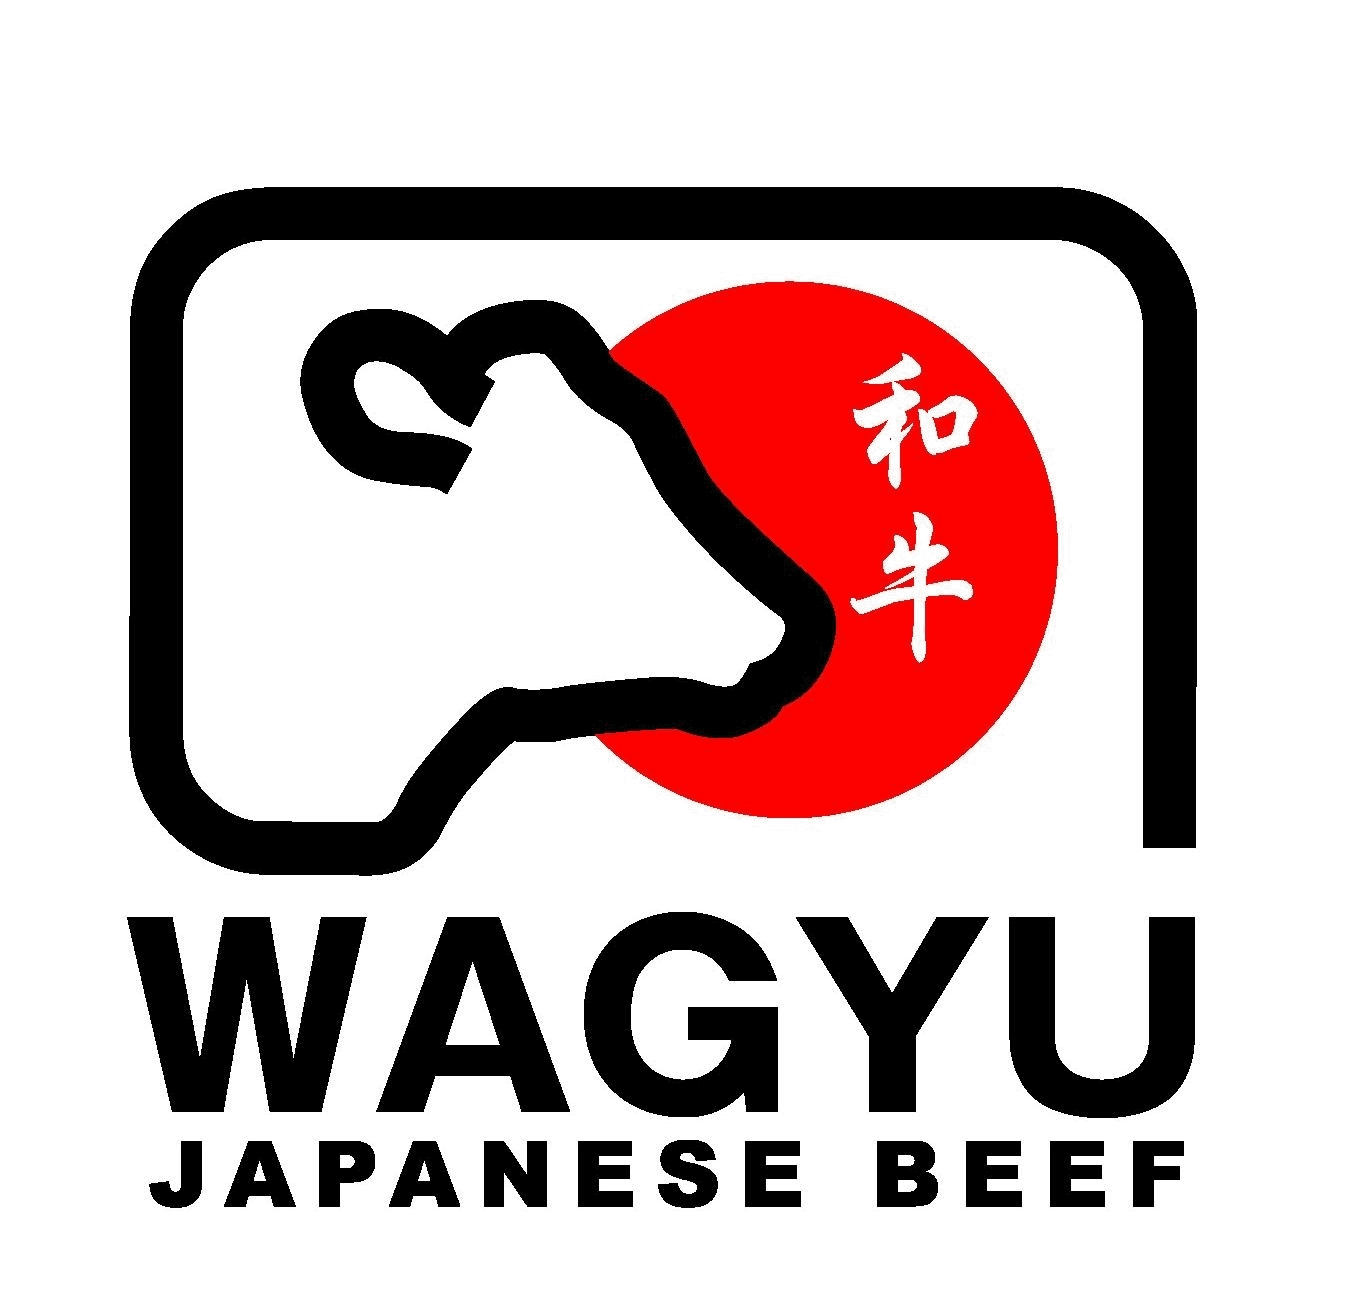 Wagyu japanese beef badge